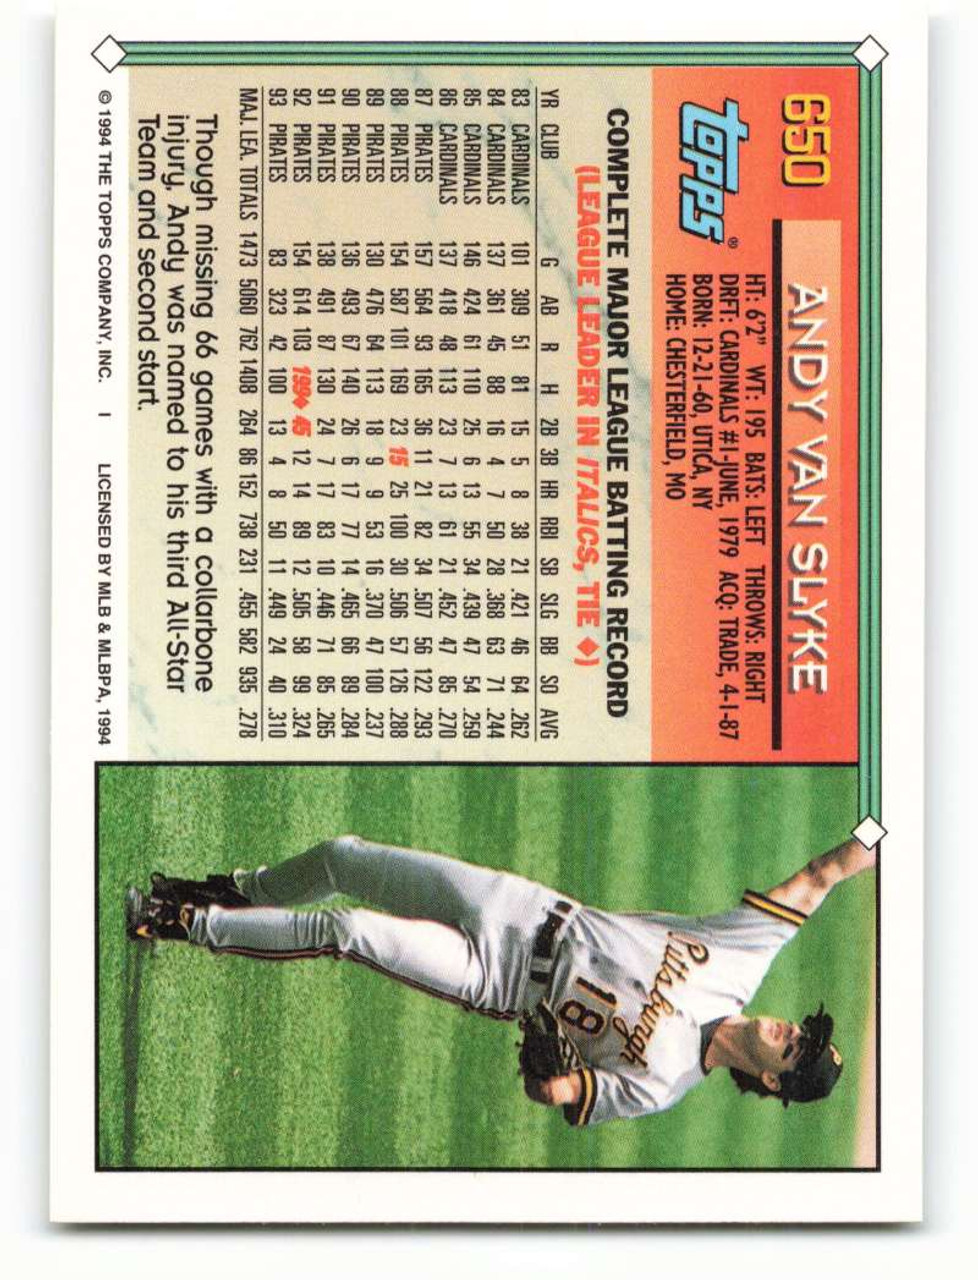  1990 Topps # 775 Andy Van Slyke Pittsburgh Pirates